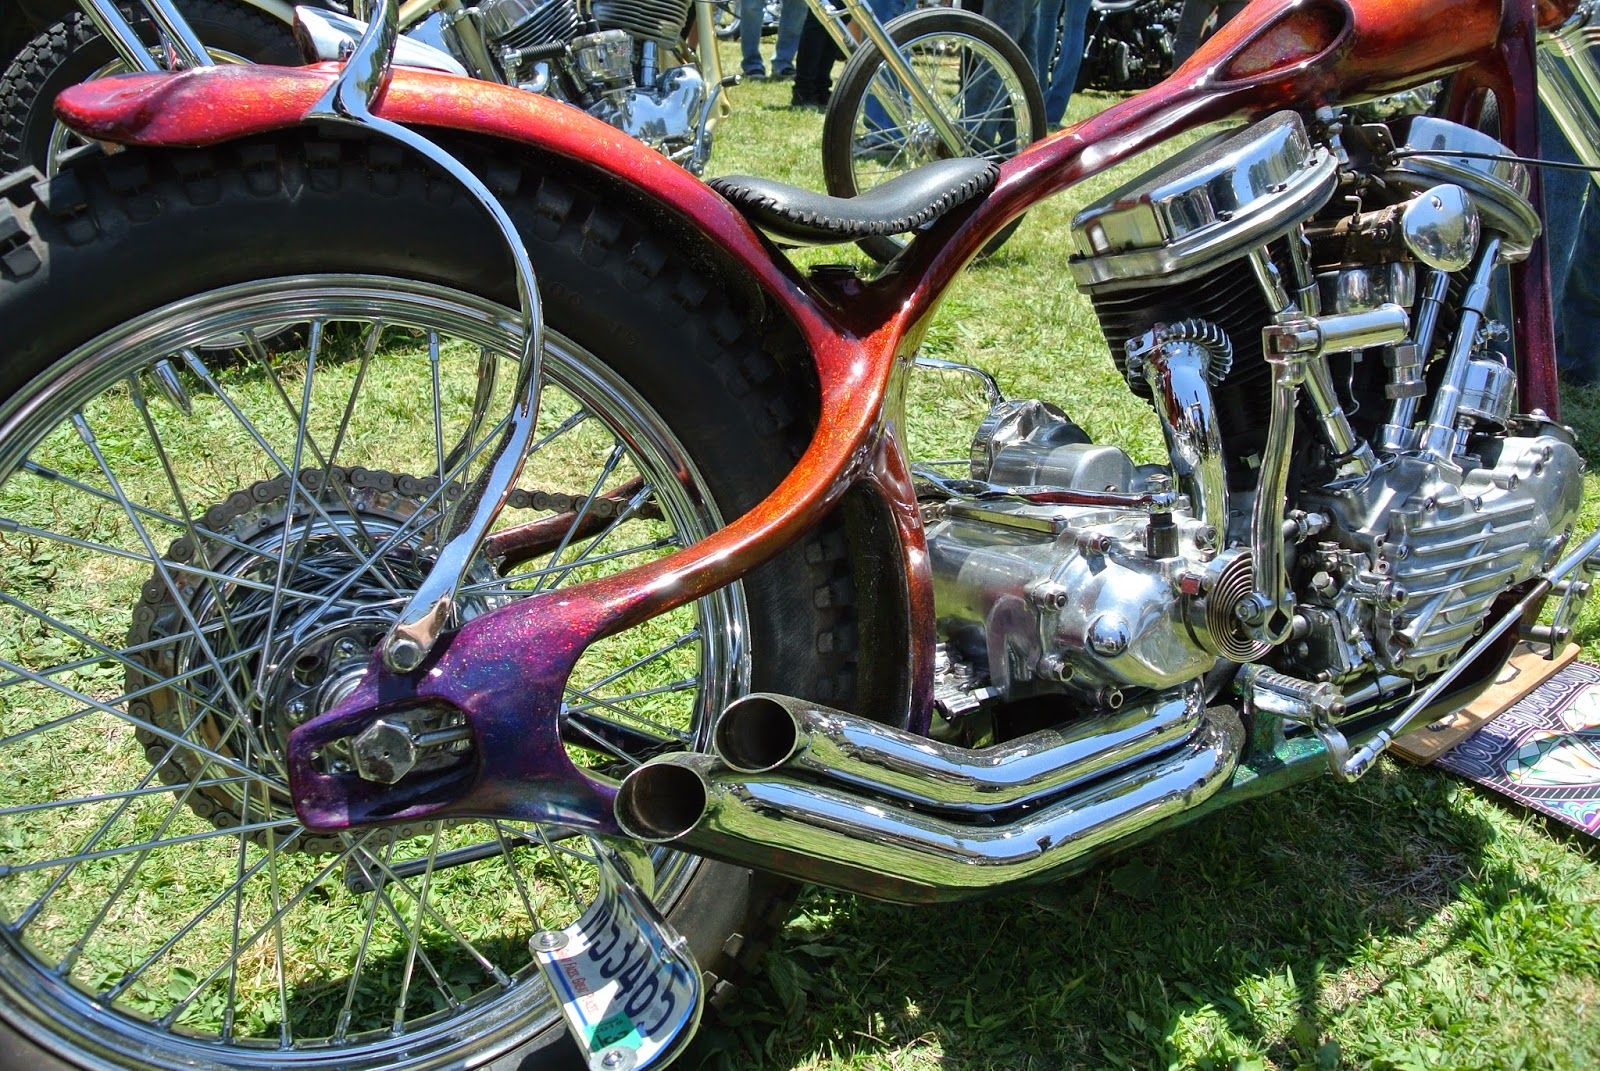 Panhead Show Bike for Born-Free by Tom Fugle